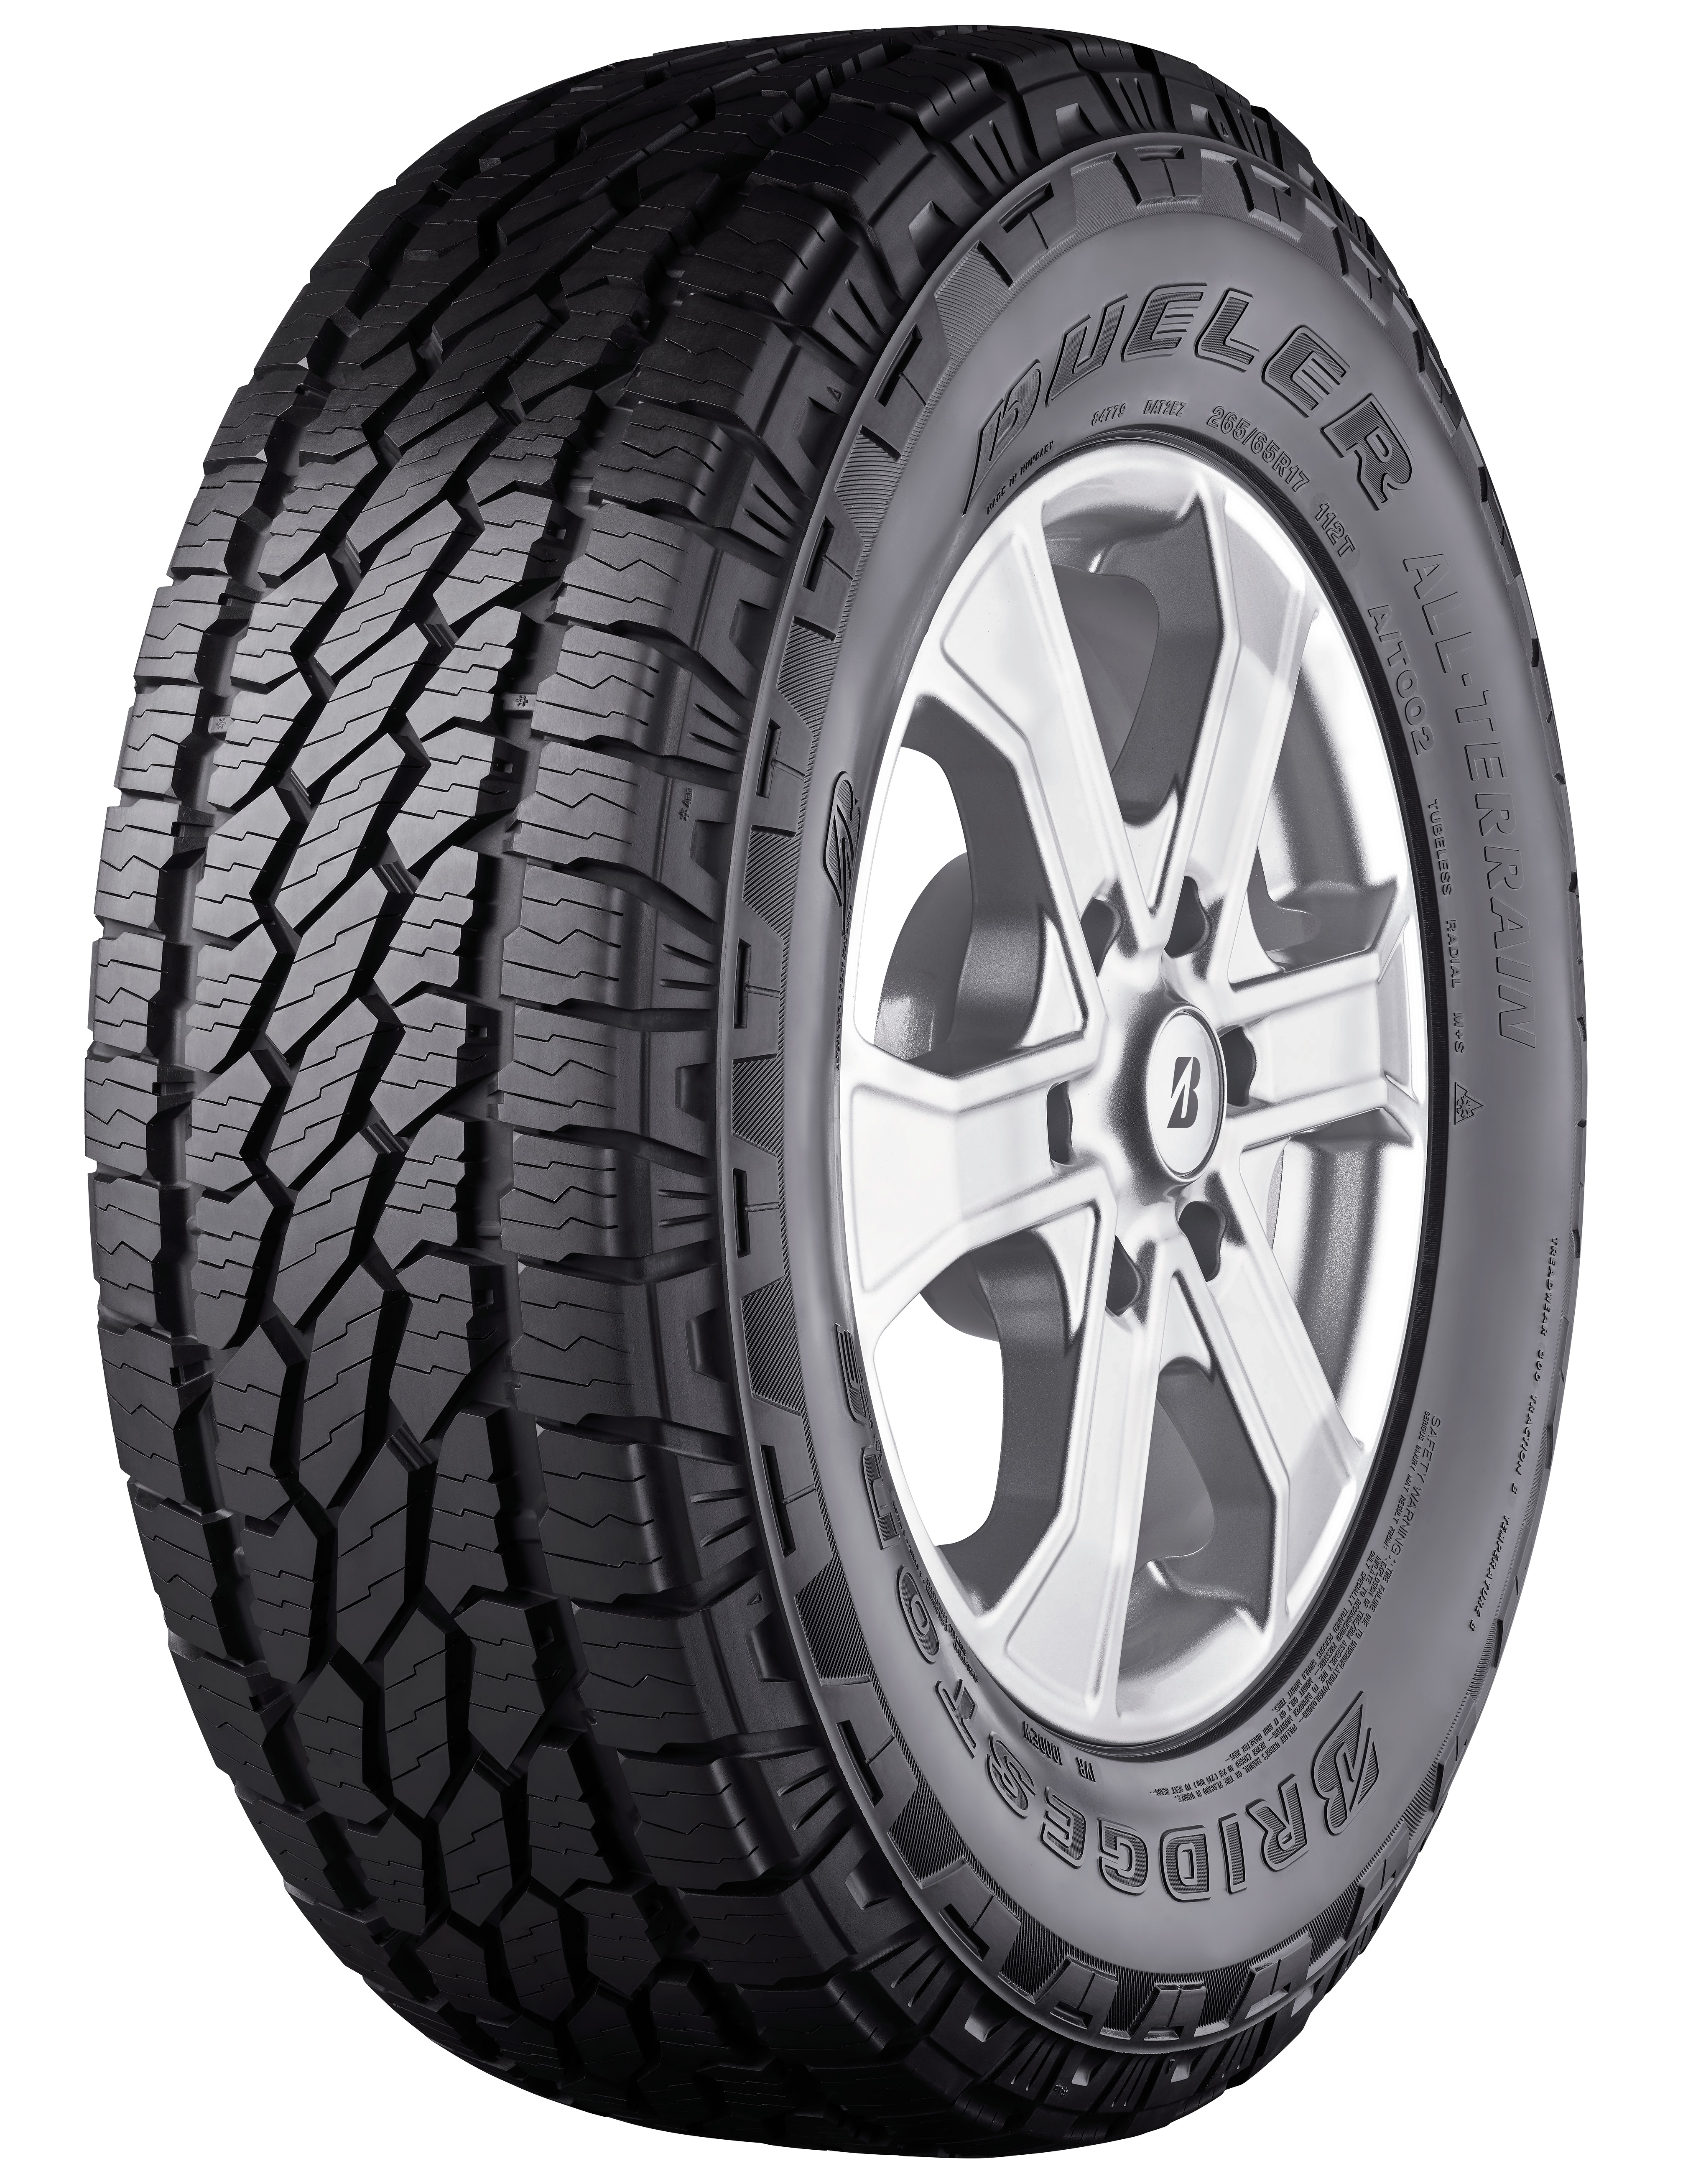 Bridgestone Dueler All Terrain AT002 Tyre Tests Reviews and 